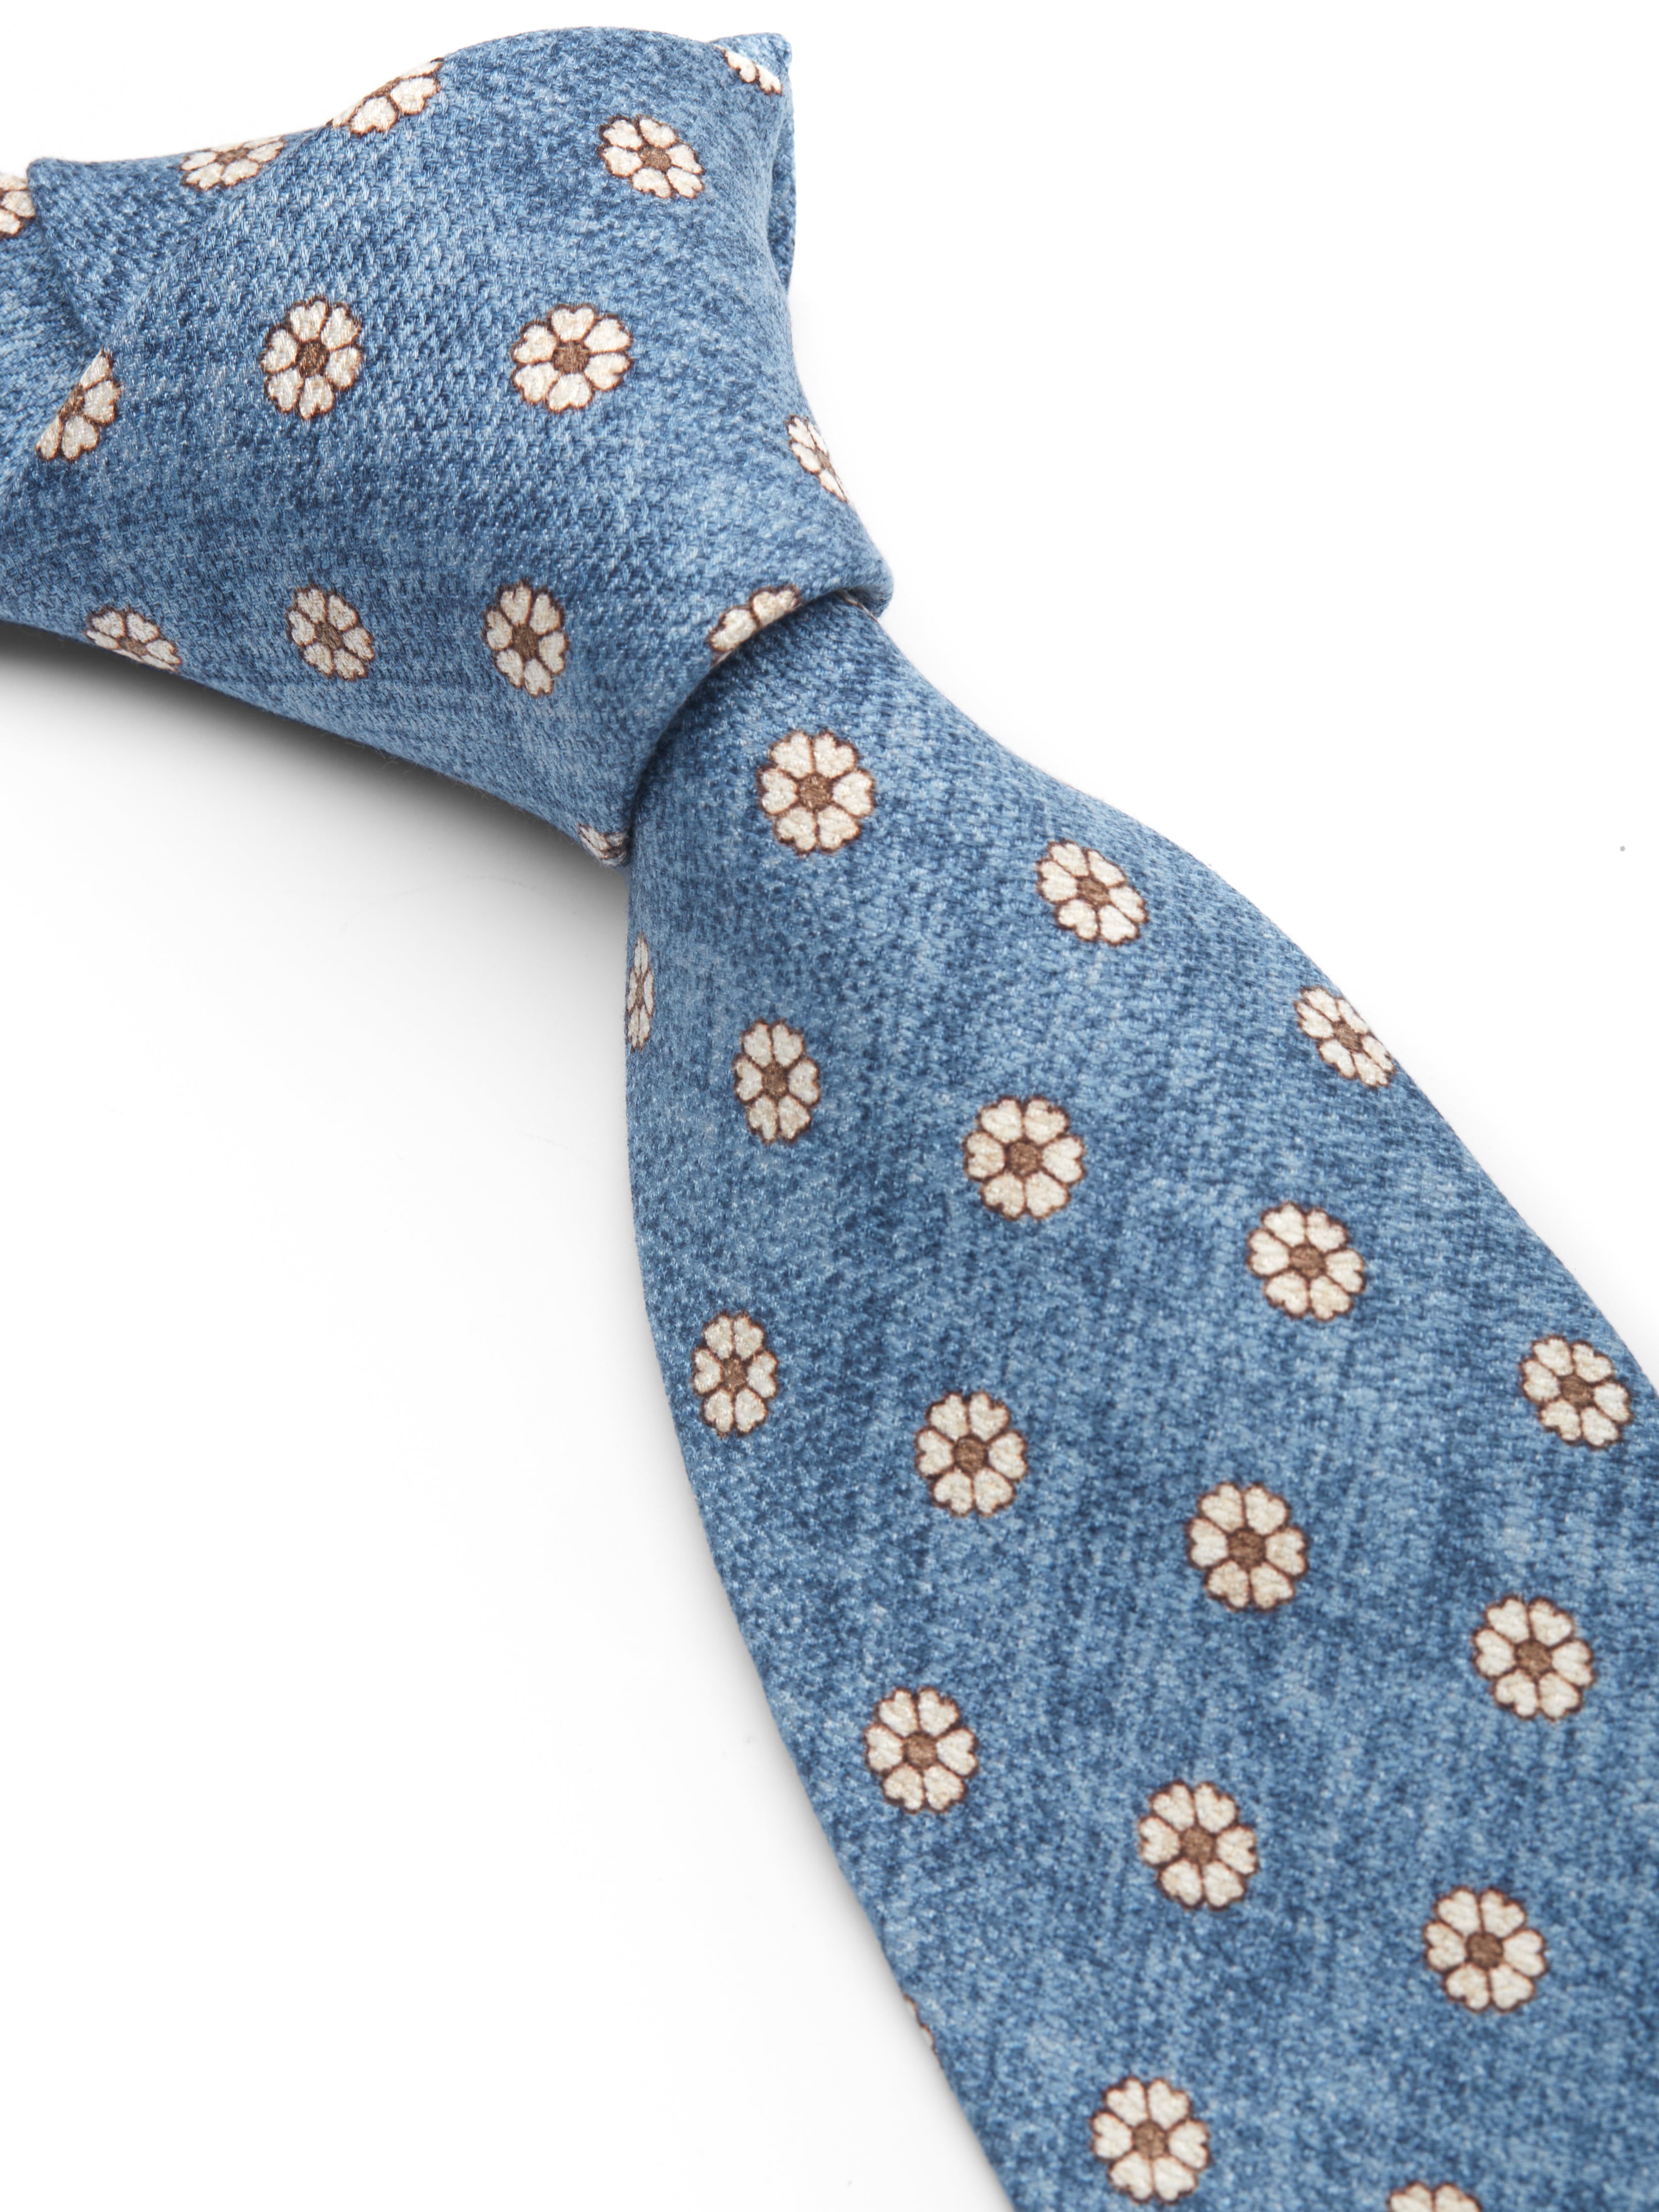 Light Blue Osterley Silk Tie